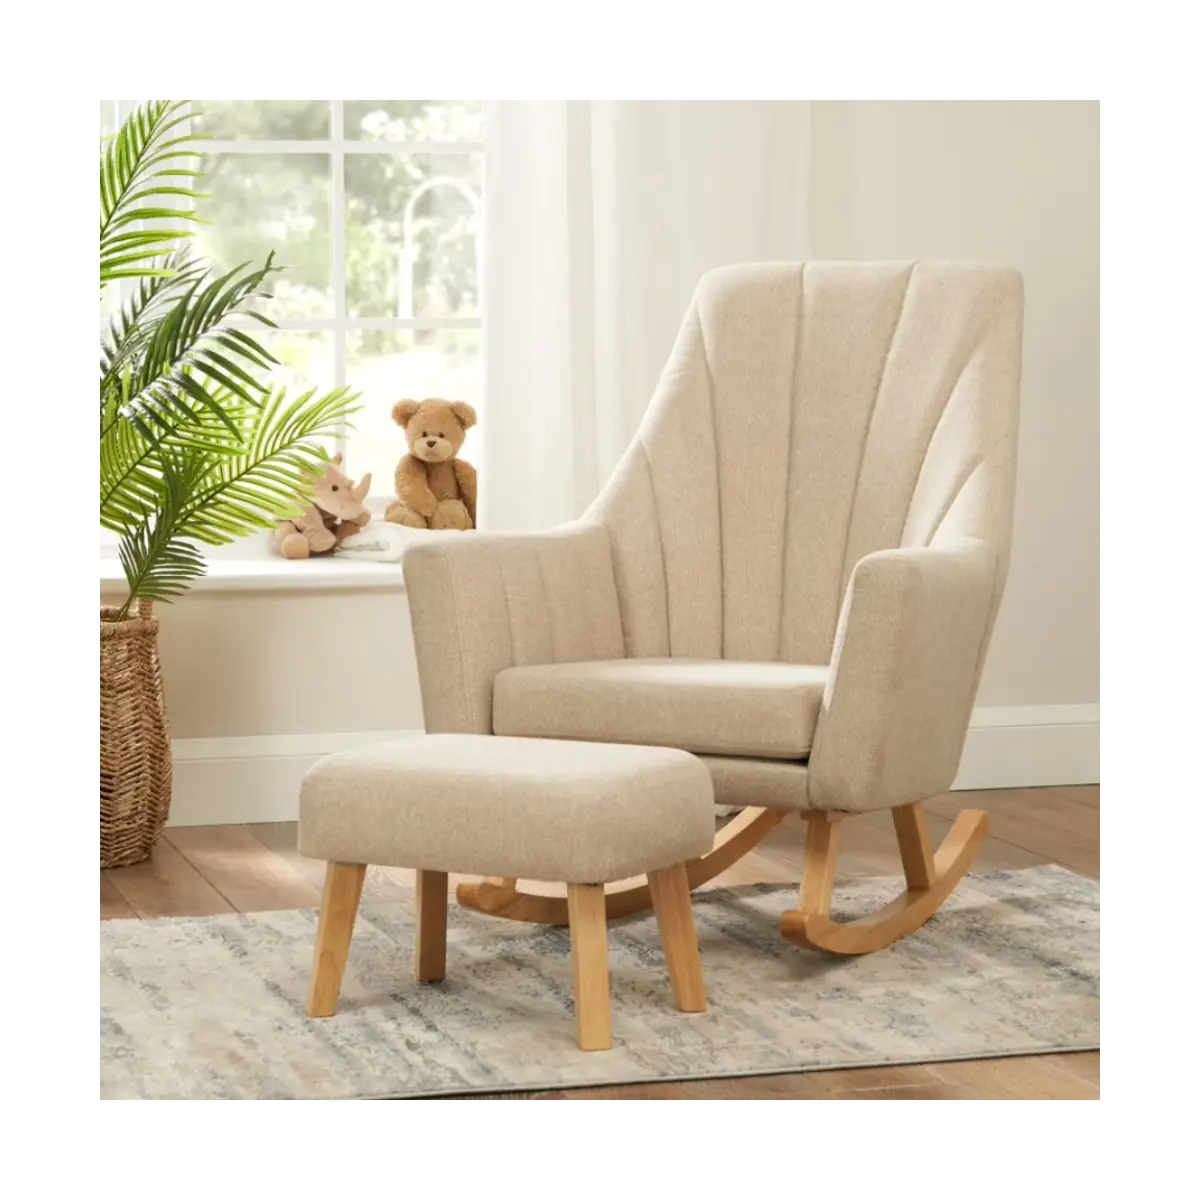 Image of Tutti Bambini Jonah Rocking Chair and Footstool Set-Stone + Free Nursing Pillow Worth £59.99!